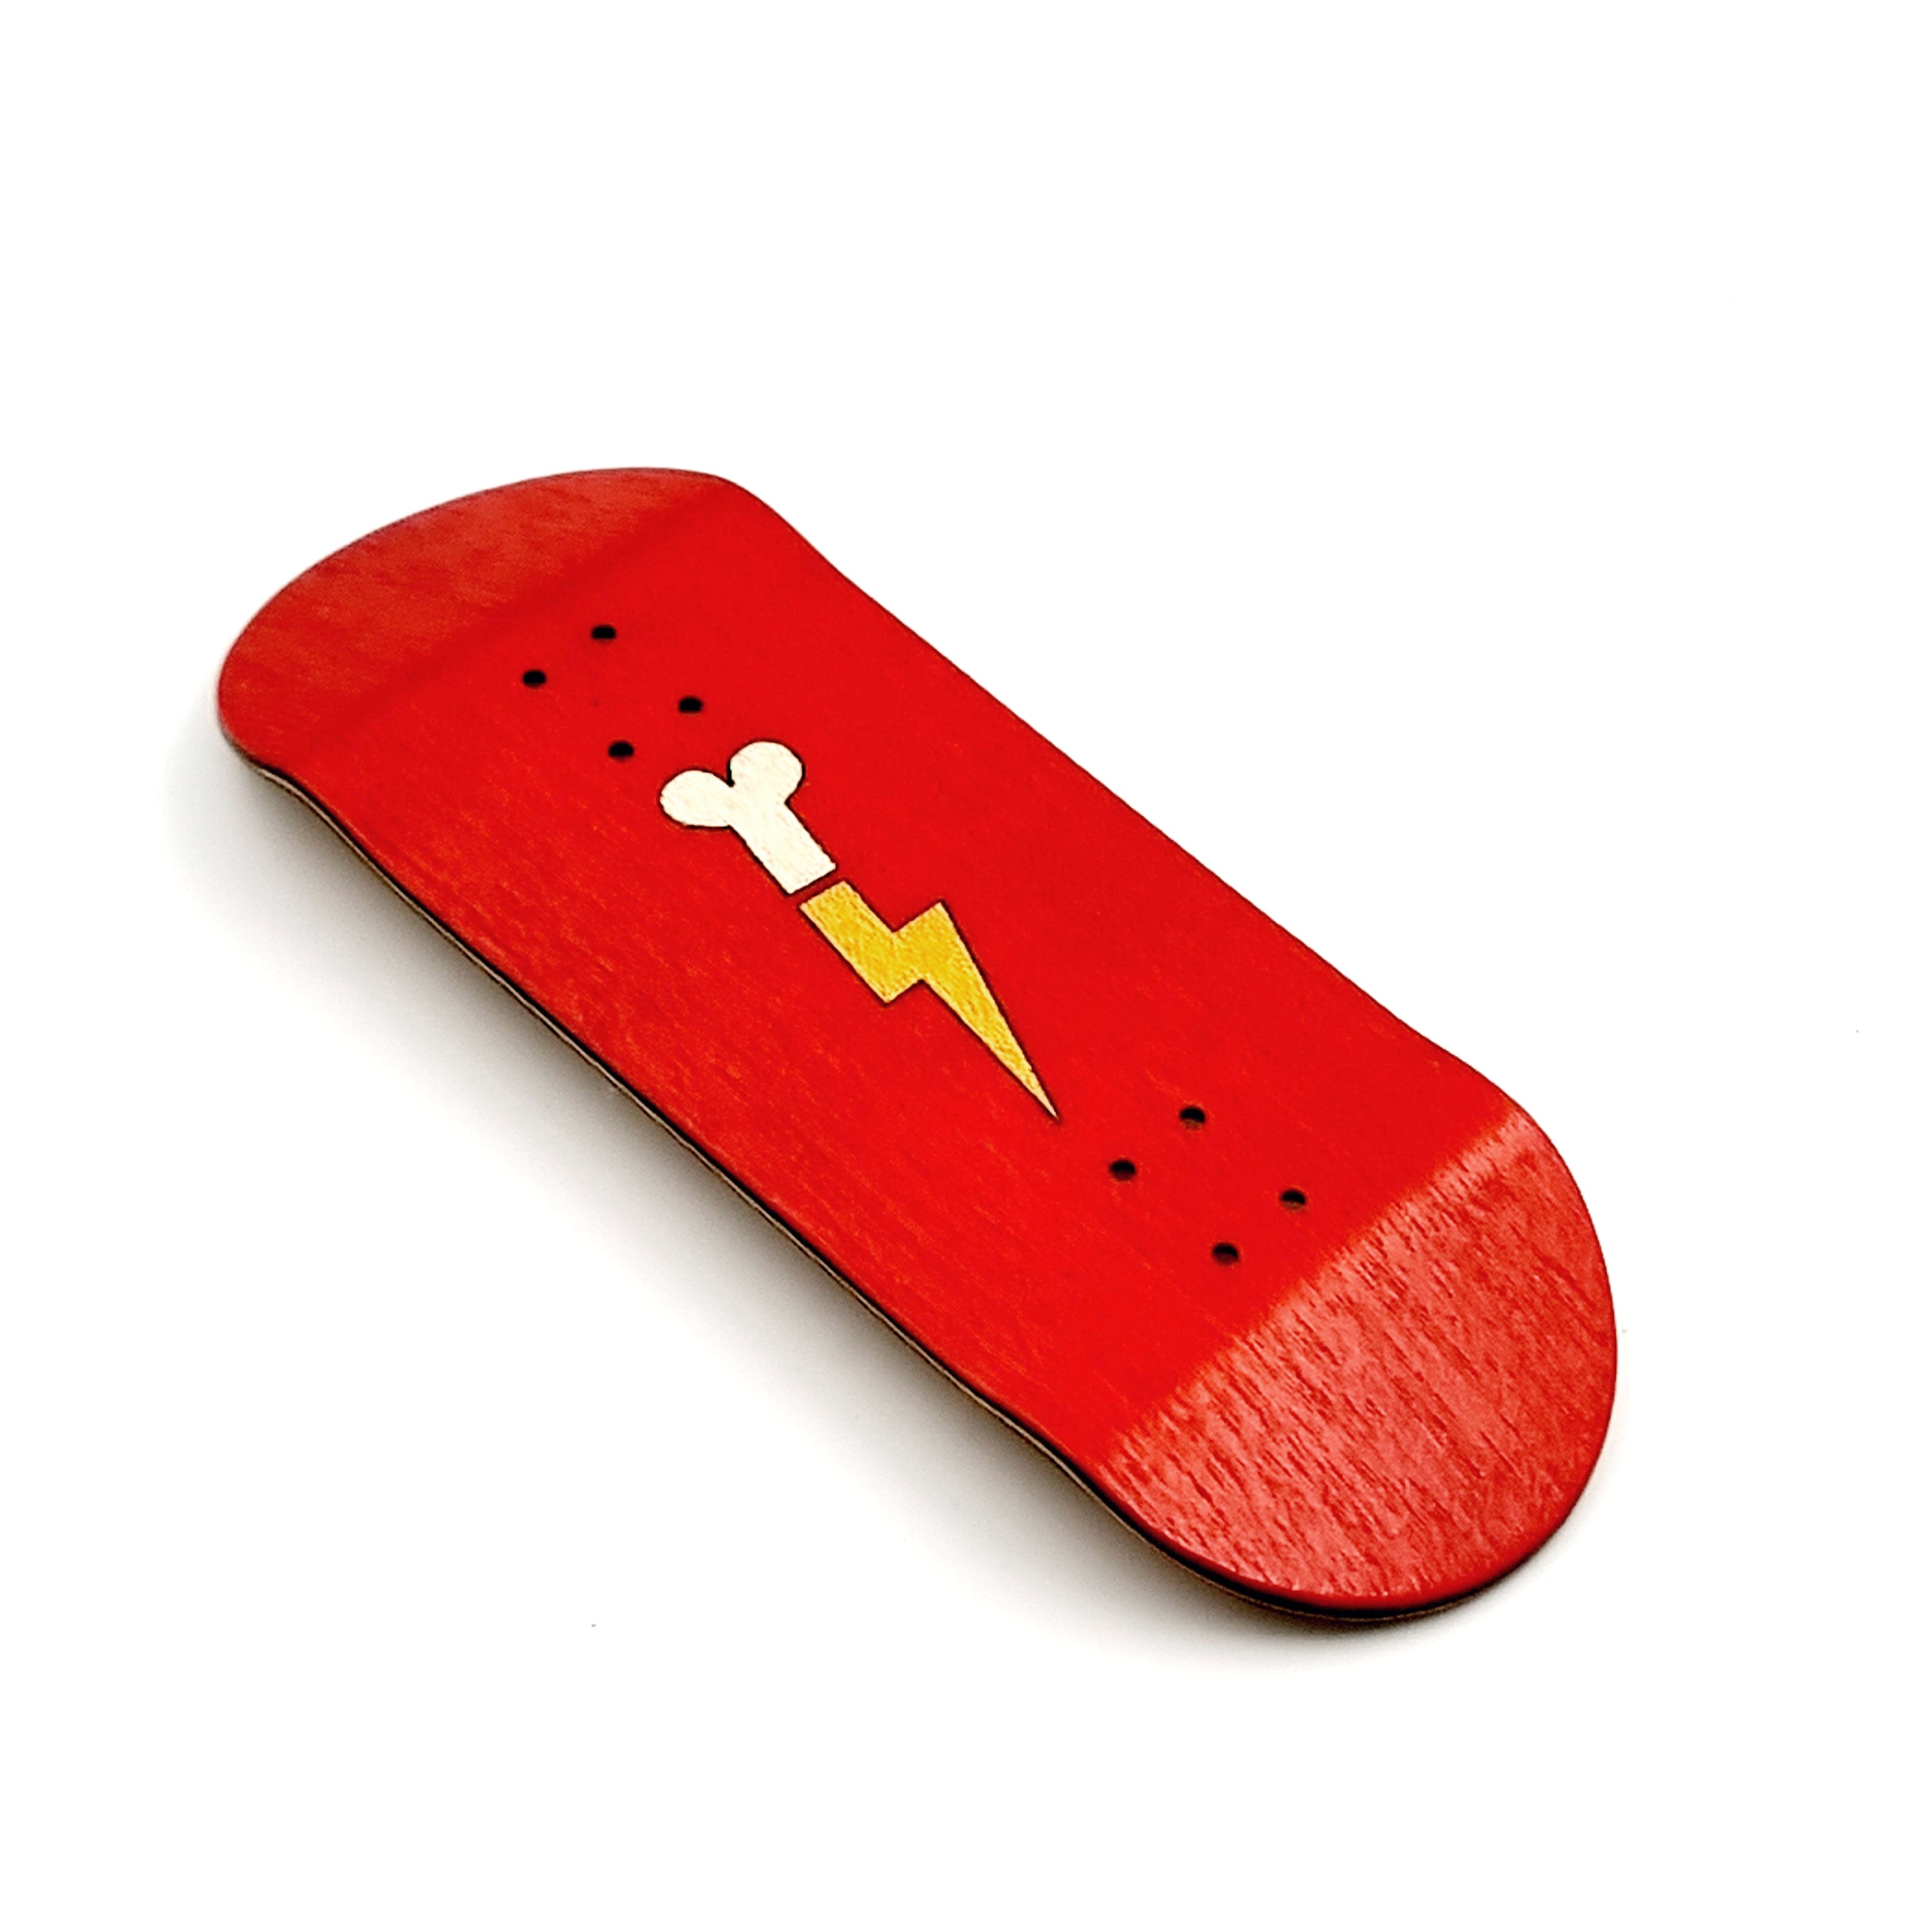 FlashBone Fingerboard Pro Set "Logo" Split-Ply (Red) Complete